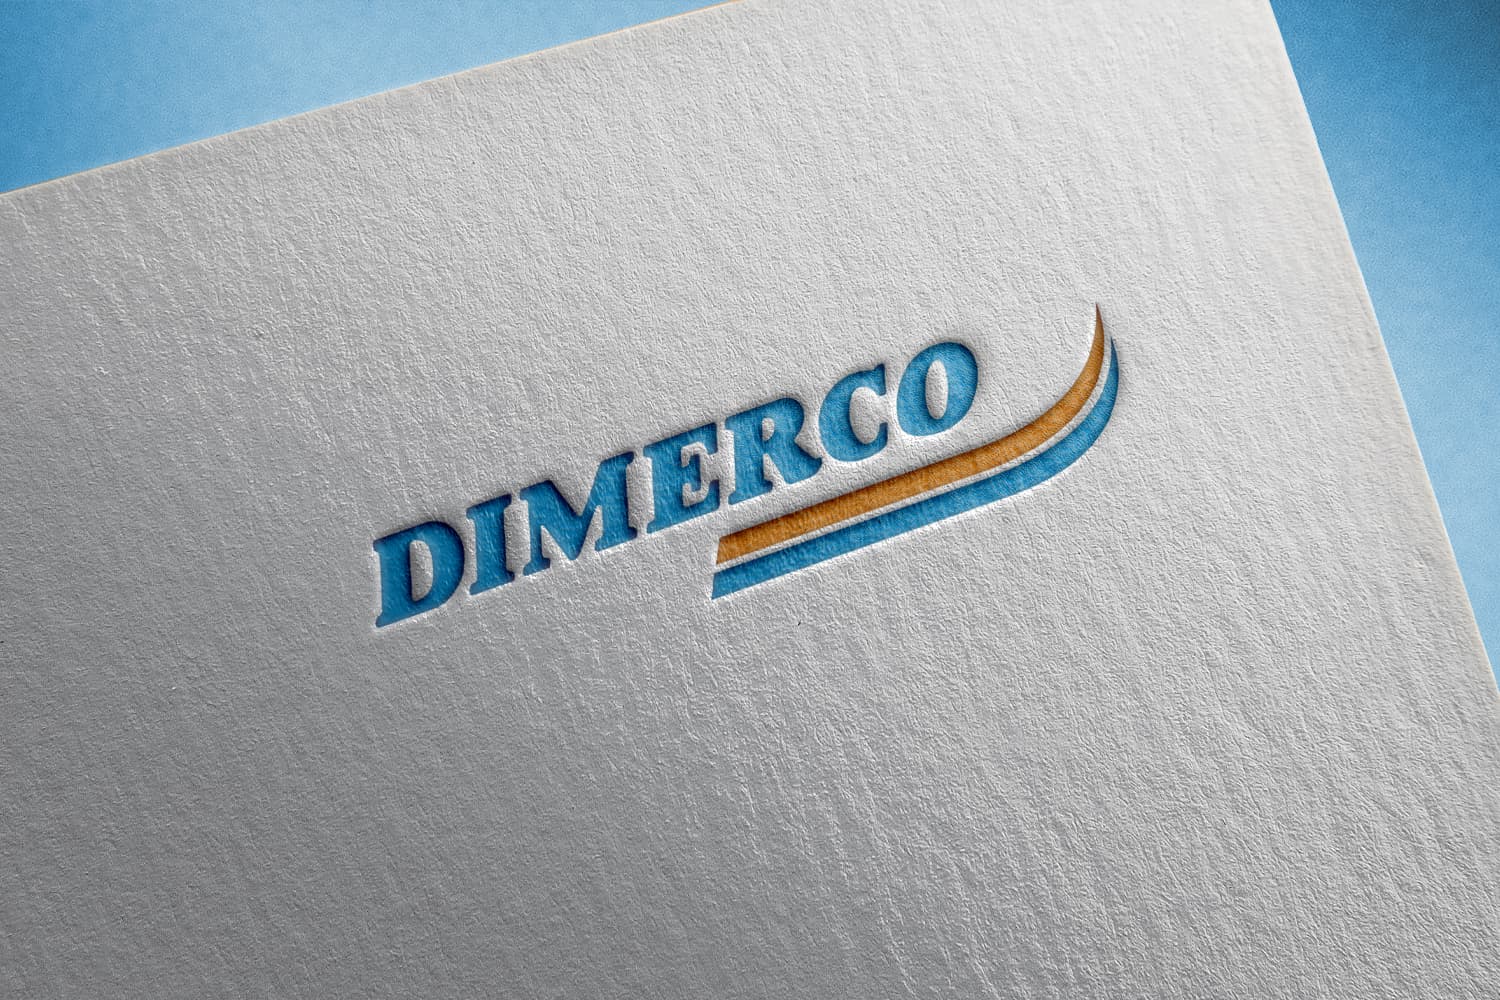 Mockup of Dimerco logo on paper.